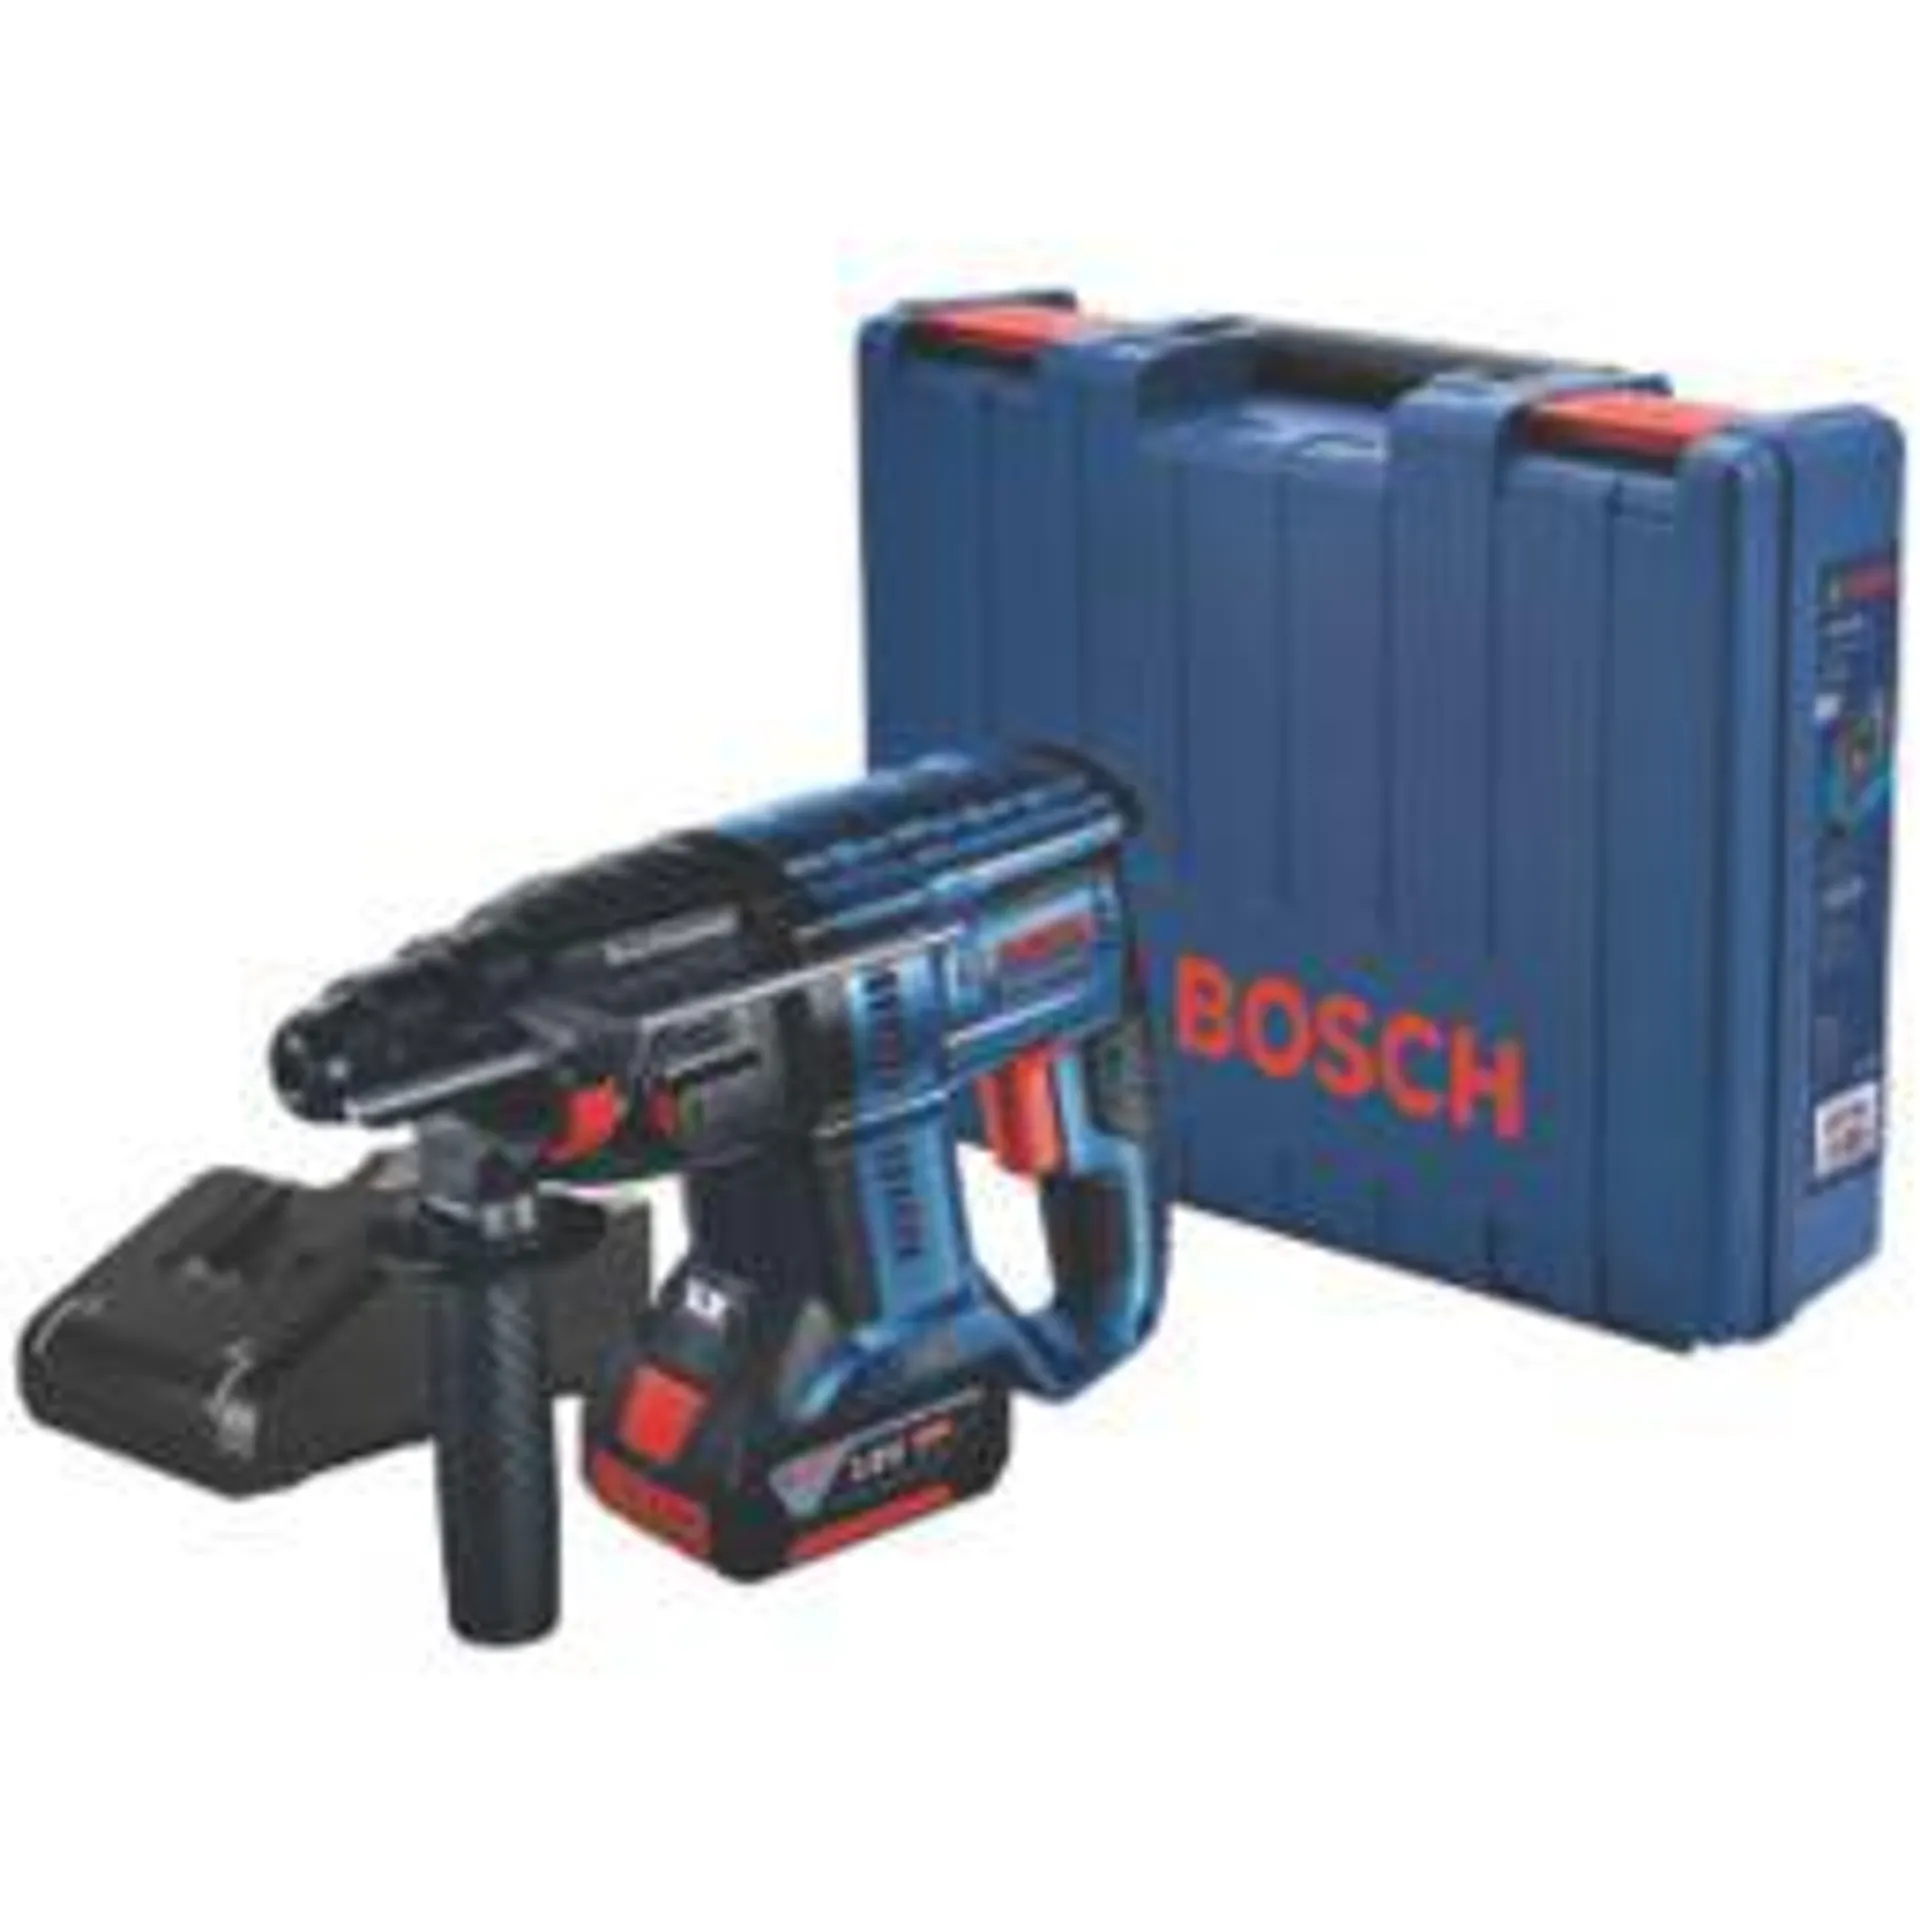 Bosch GBH 18V-21 2.4kg 18V 1 x 4.0Ah Li-Ion Coolpack Brushless Cordless SDS Plus Hammer Drill